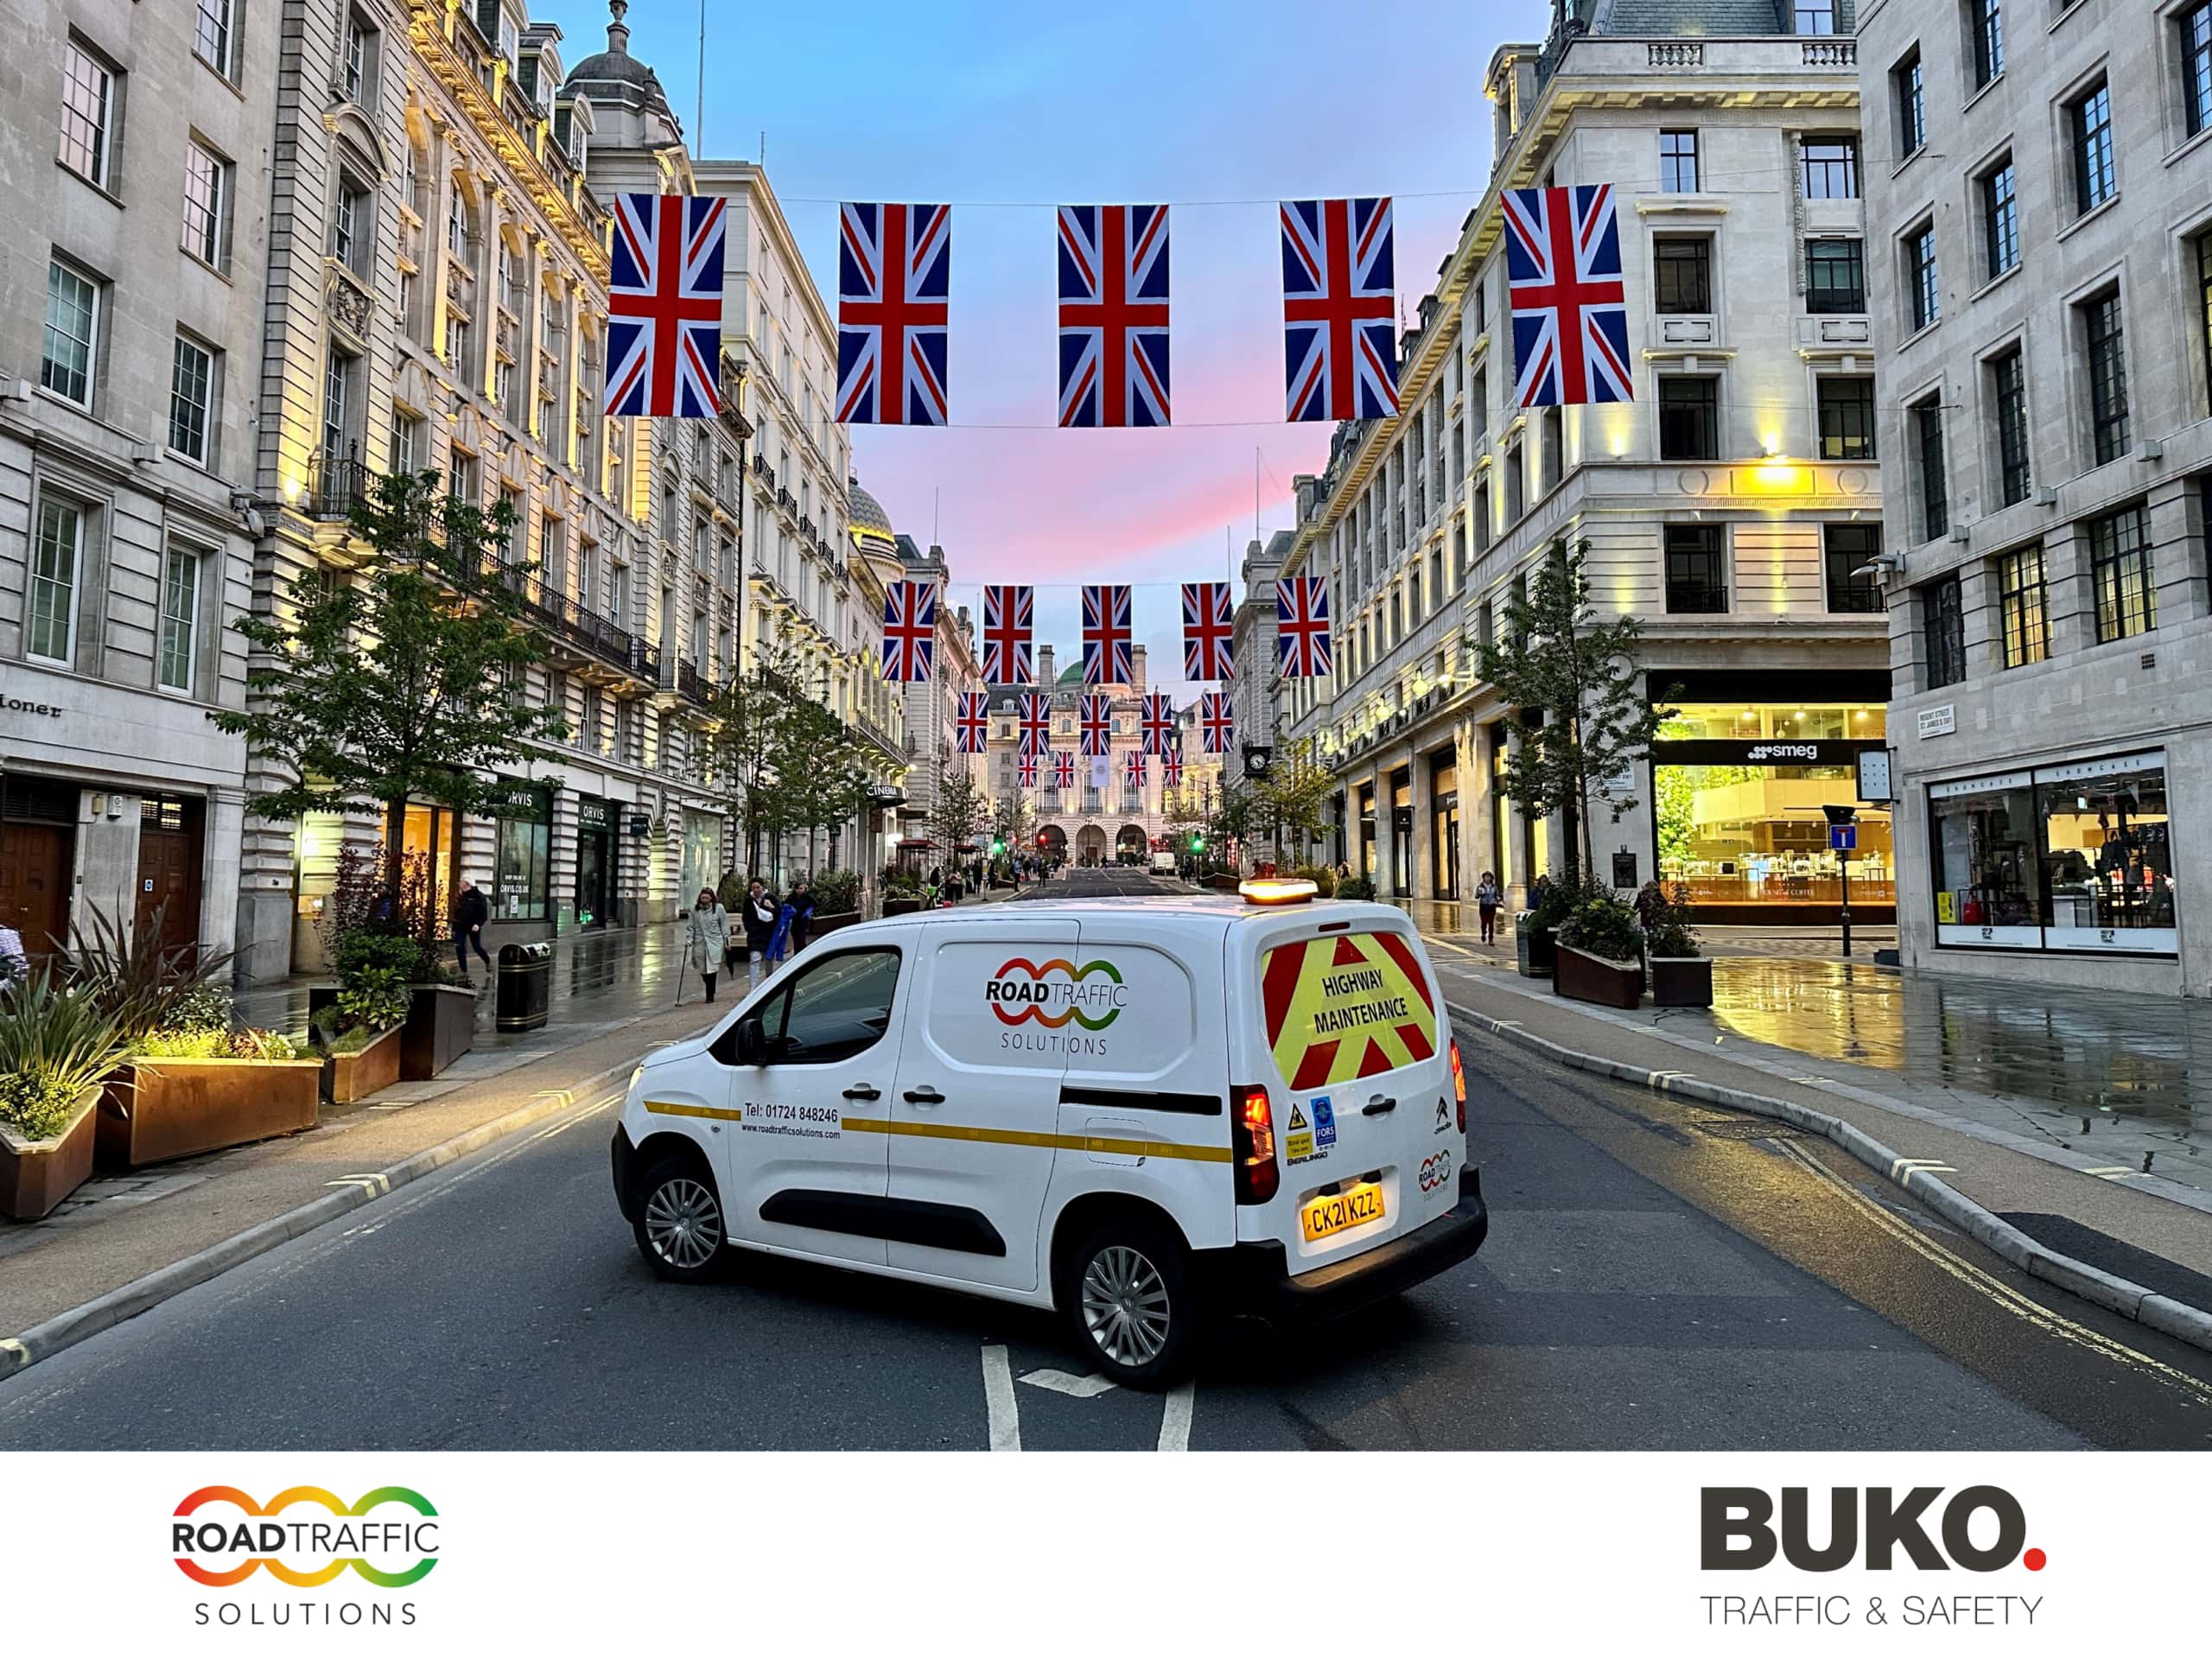 BUKO zet eerste stap in haar internationale ambitie en verwerft meerderheidsbelang in Britse dienstverlener Road Traffic Solutions Limited